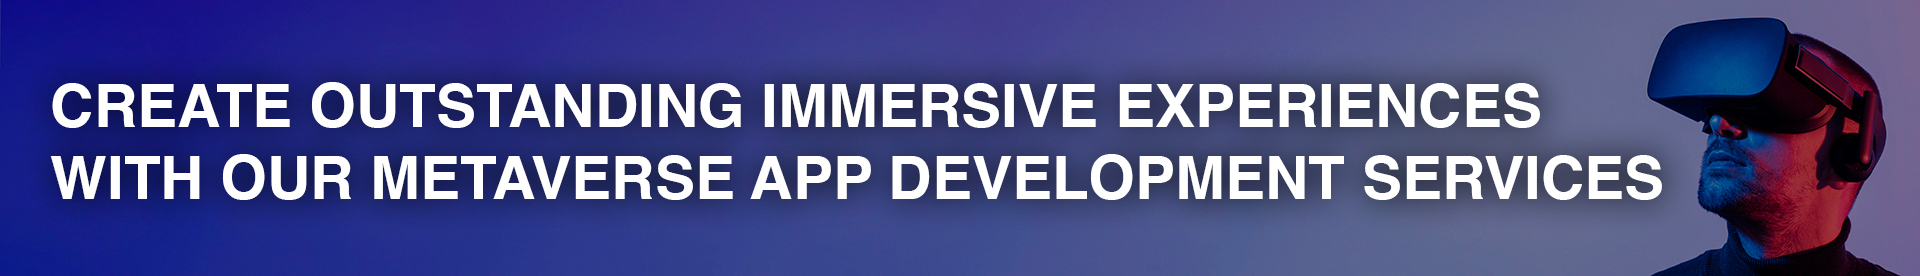 metaverse app development services